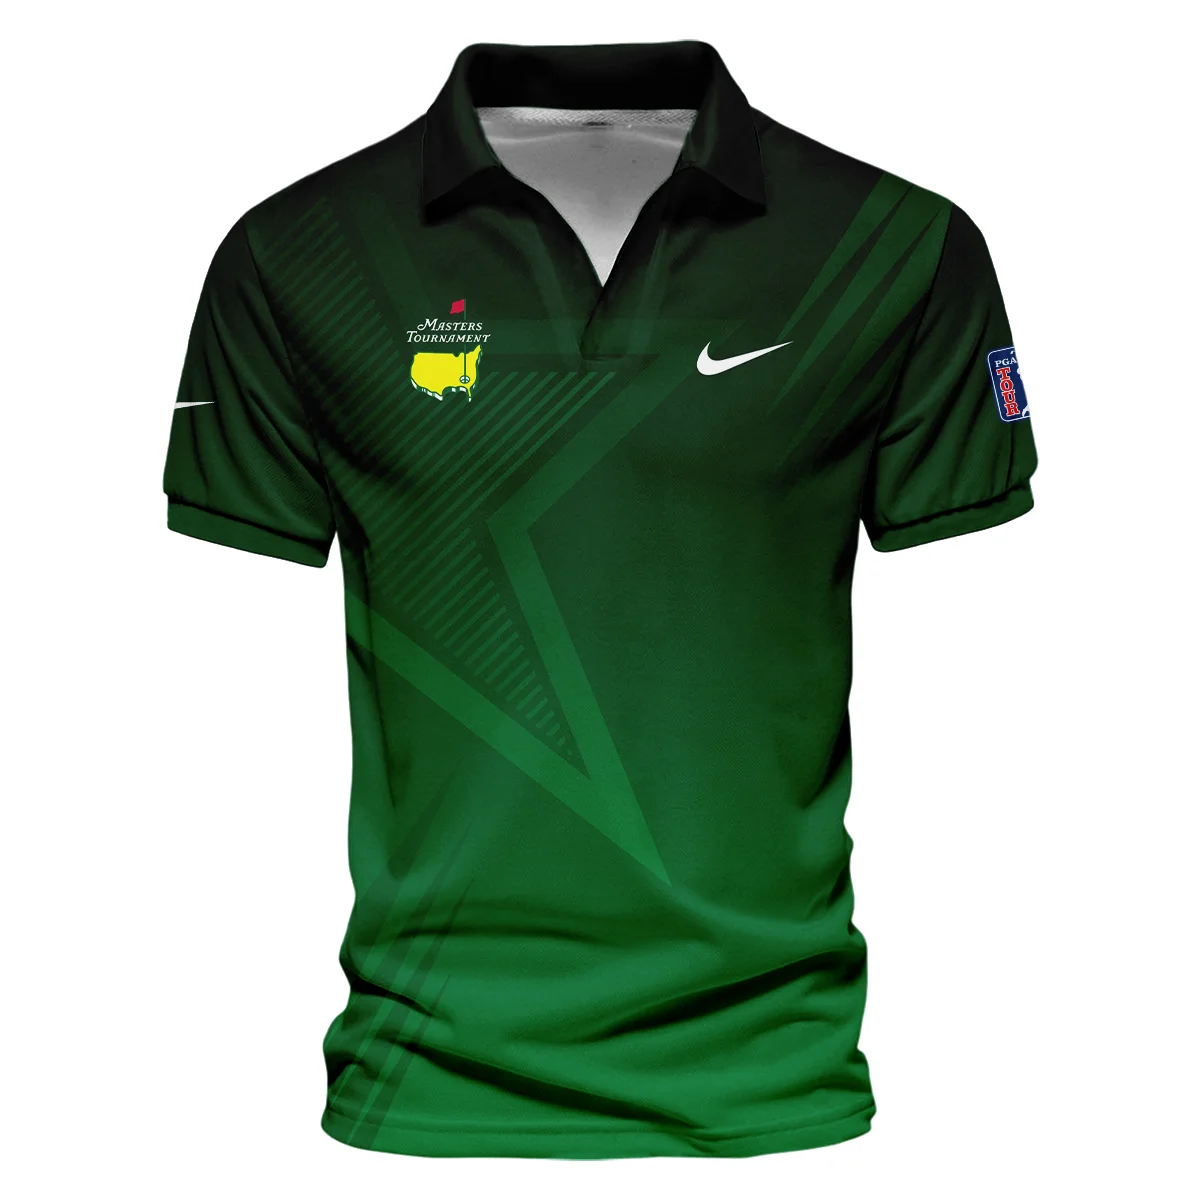 Nike Masters Tournament Polo Shirt Dark Green Gradient Star Pattern Golf Sports Quarter-Zip Jacket Style Classic Quarter-Zip Jacket